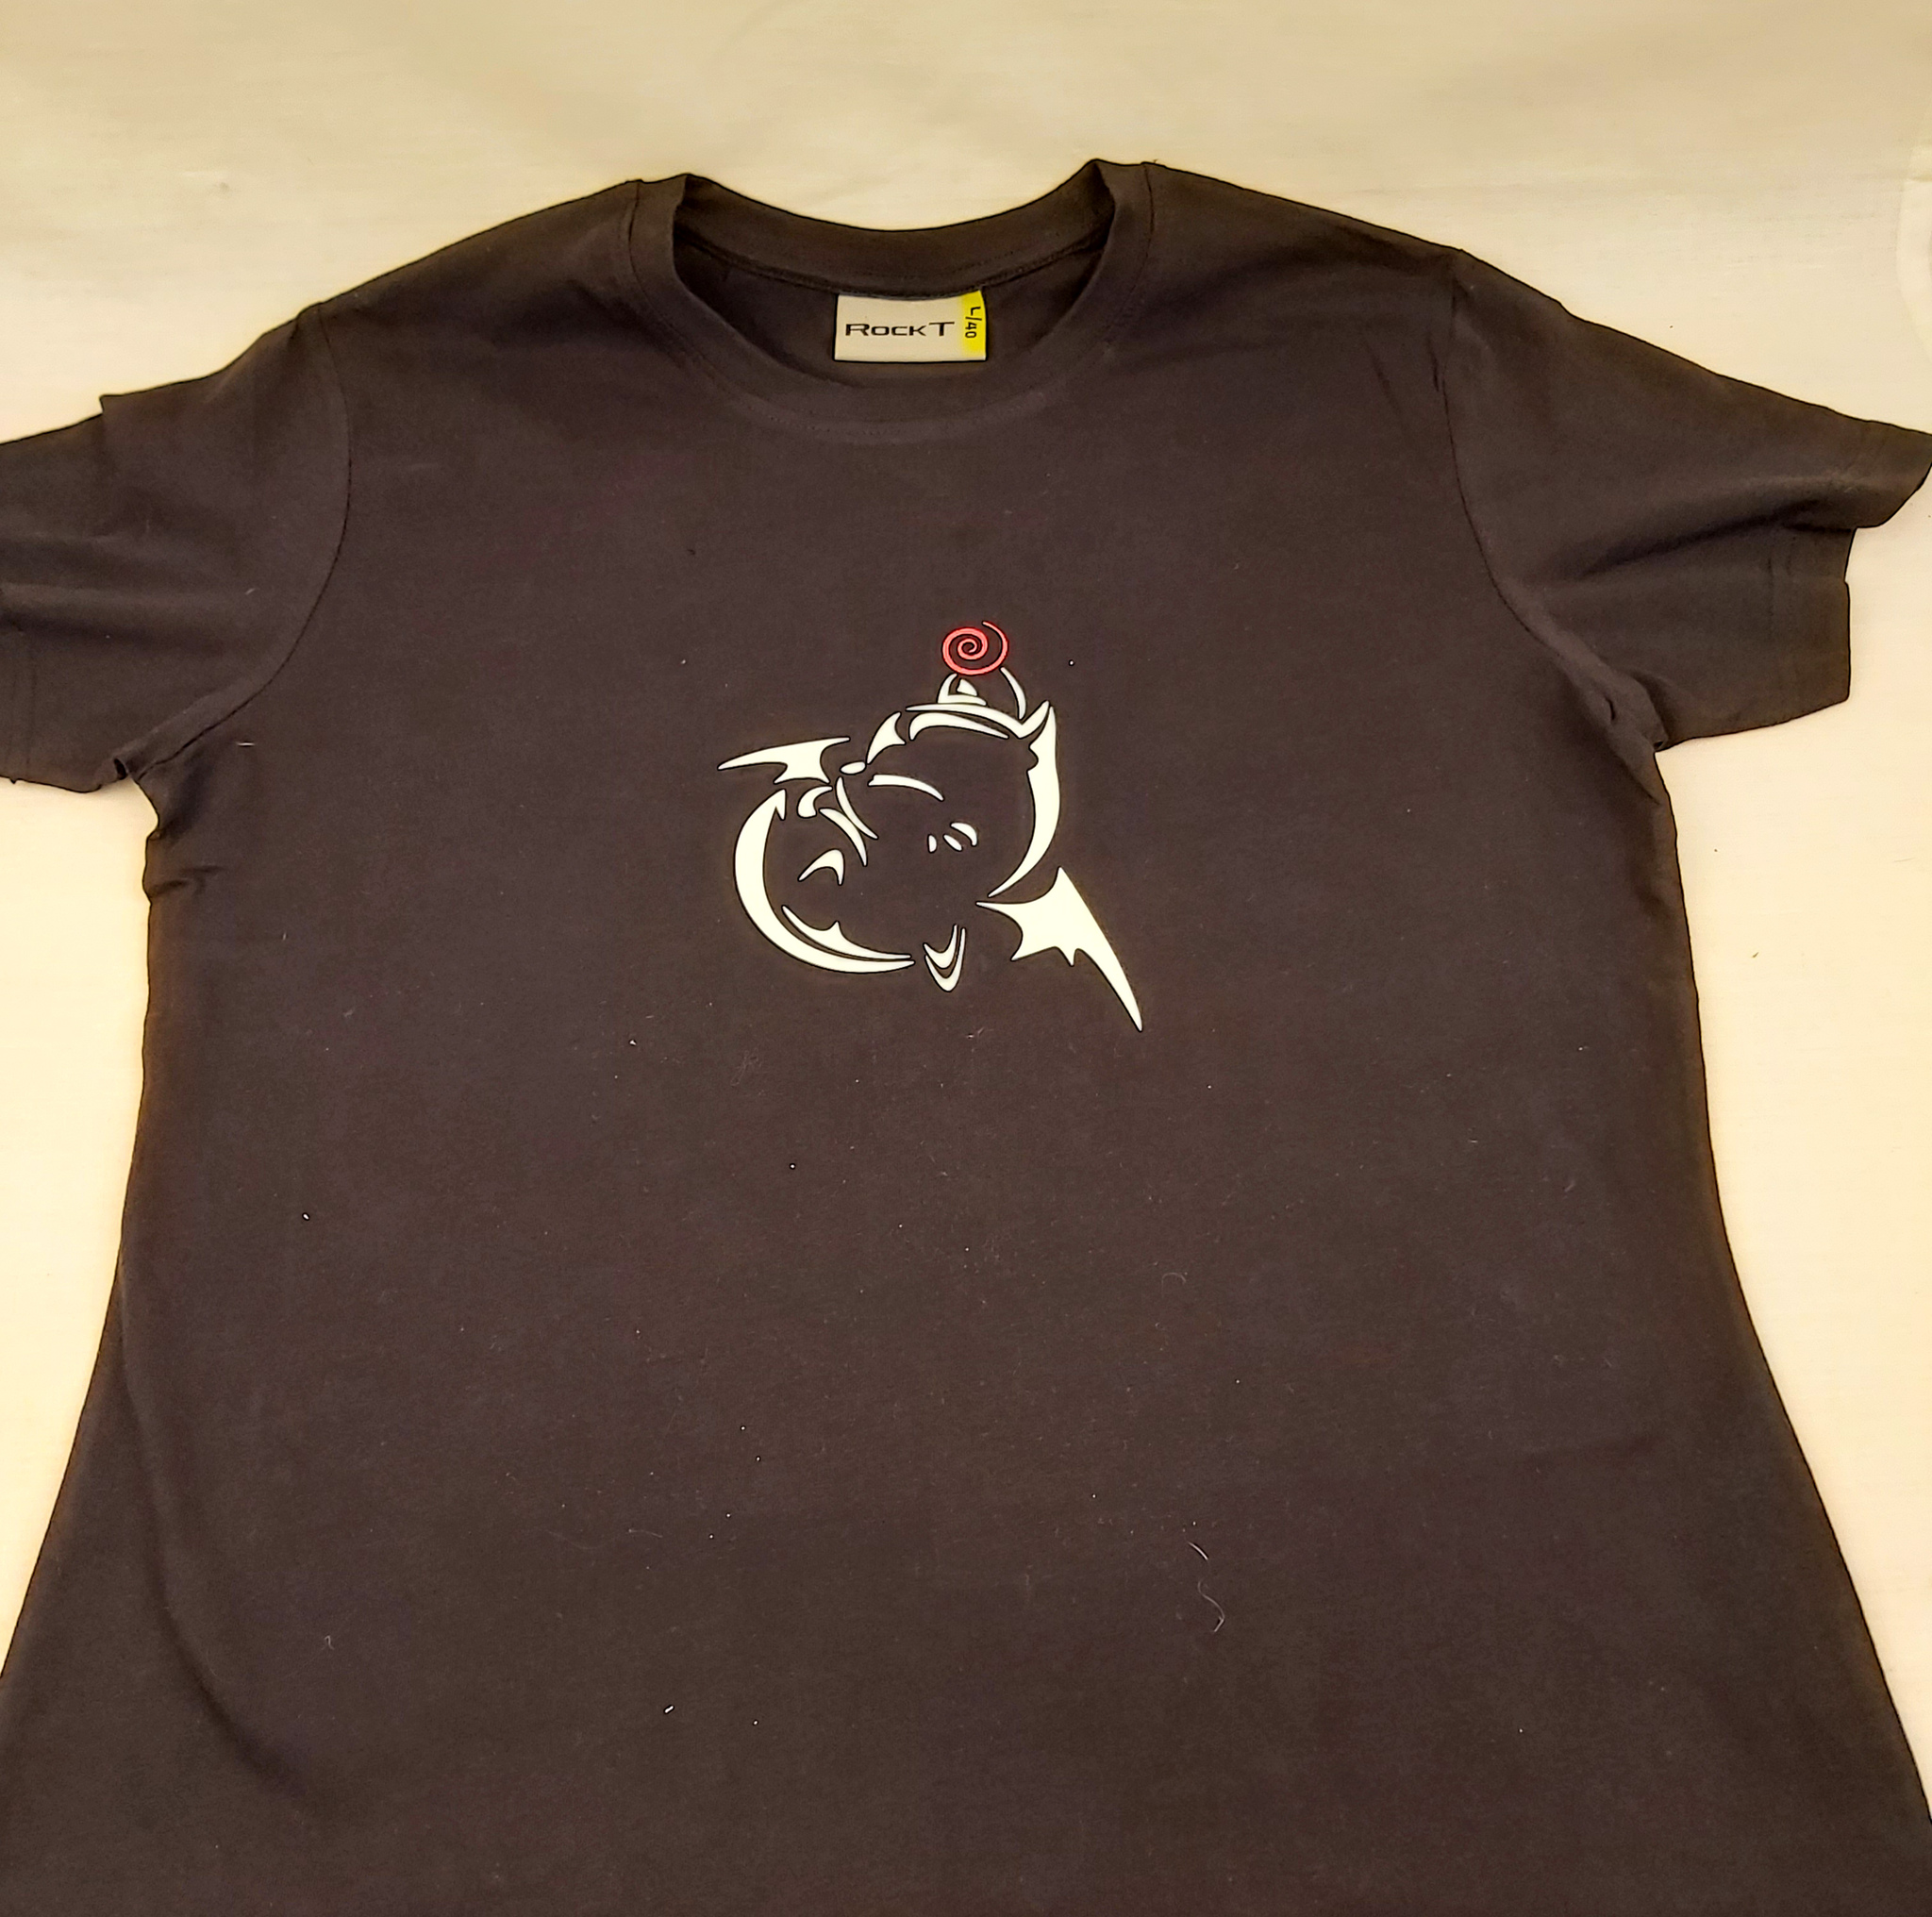 Final Fantasy t-shirt - Moogle